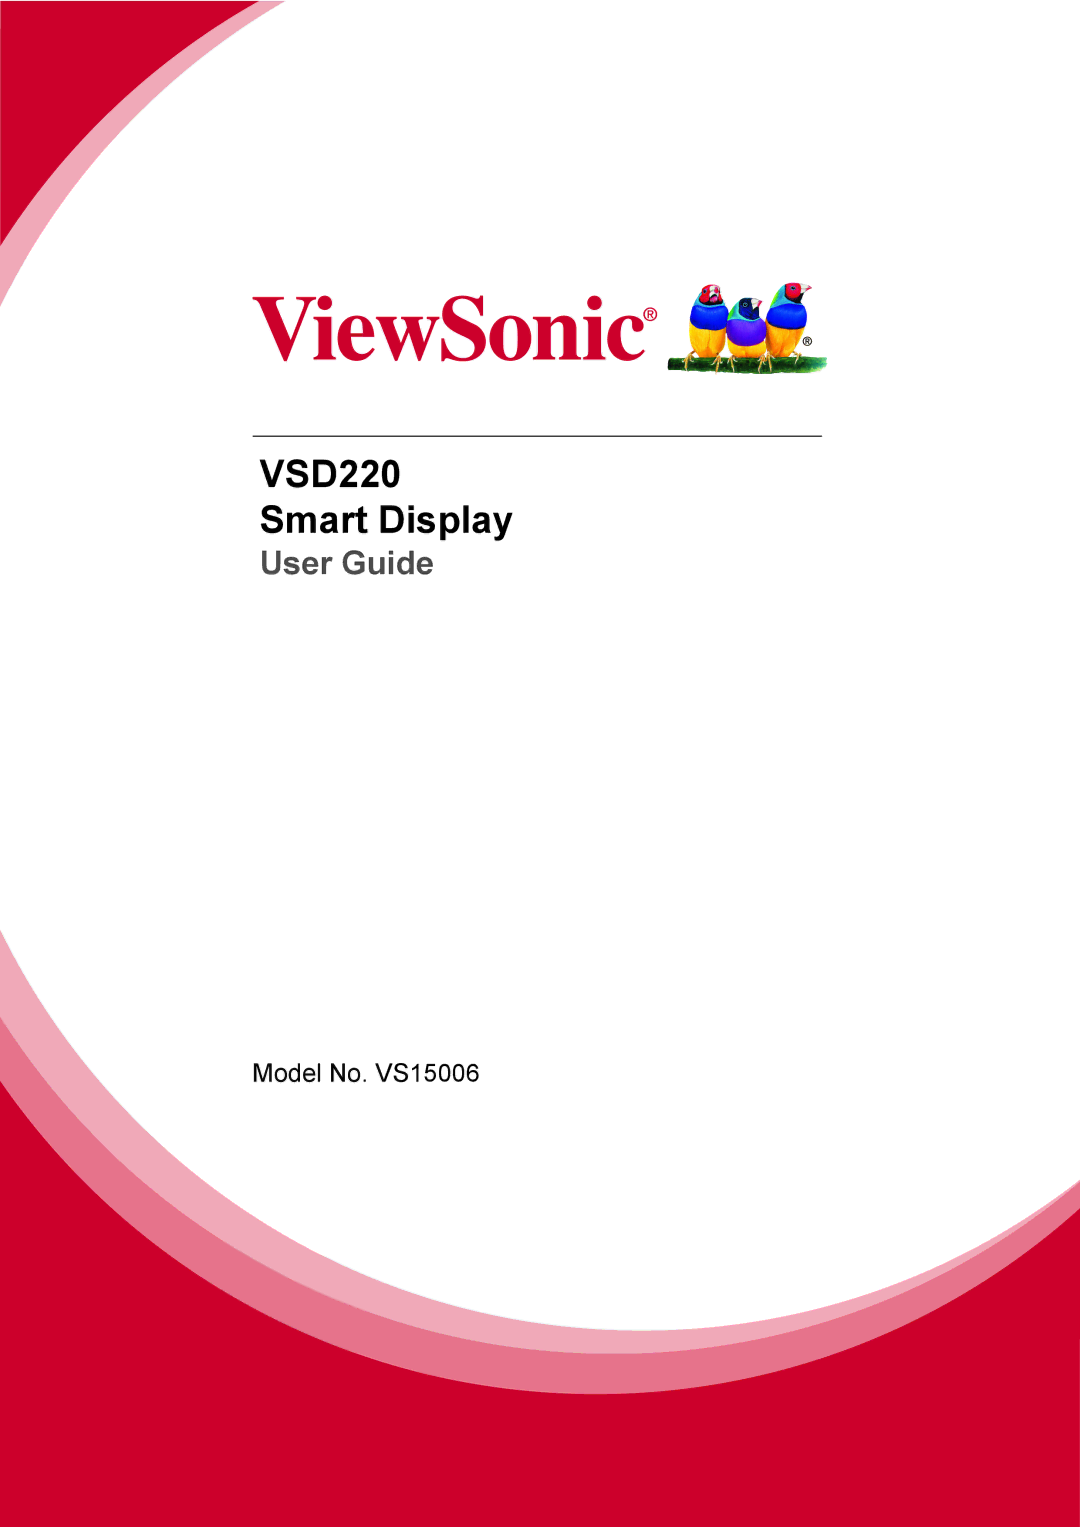 ViewSonic manual VSD220 Smart Display 